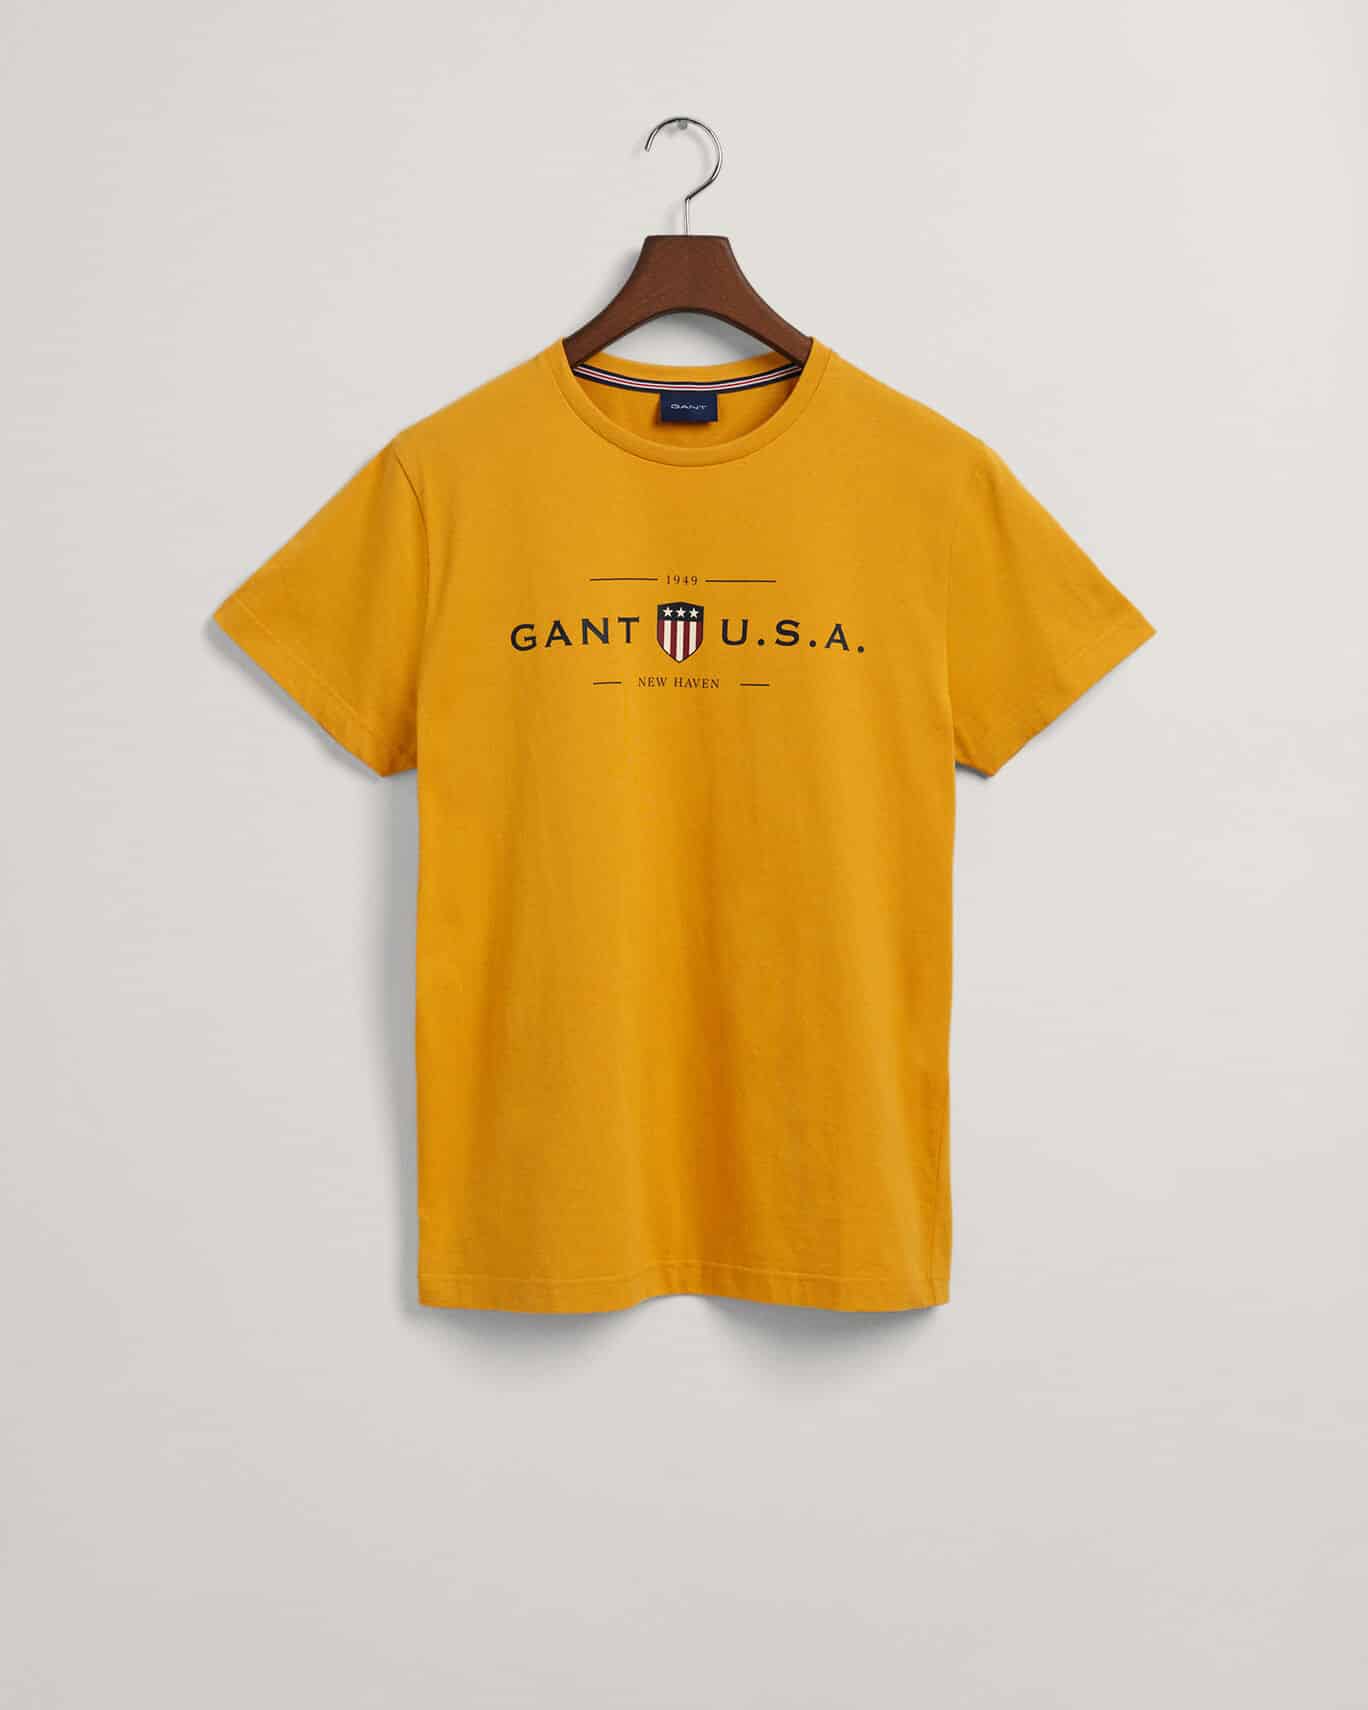 Buy Gant Banner Shield - Ivy Scandinavian Store Fashion Gold T-shirt